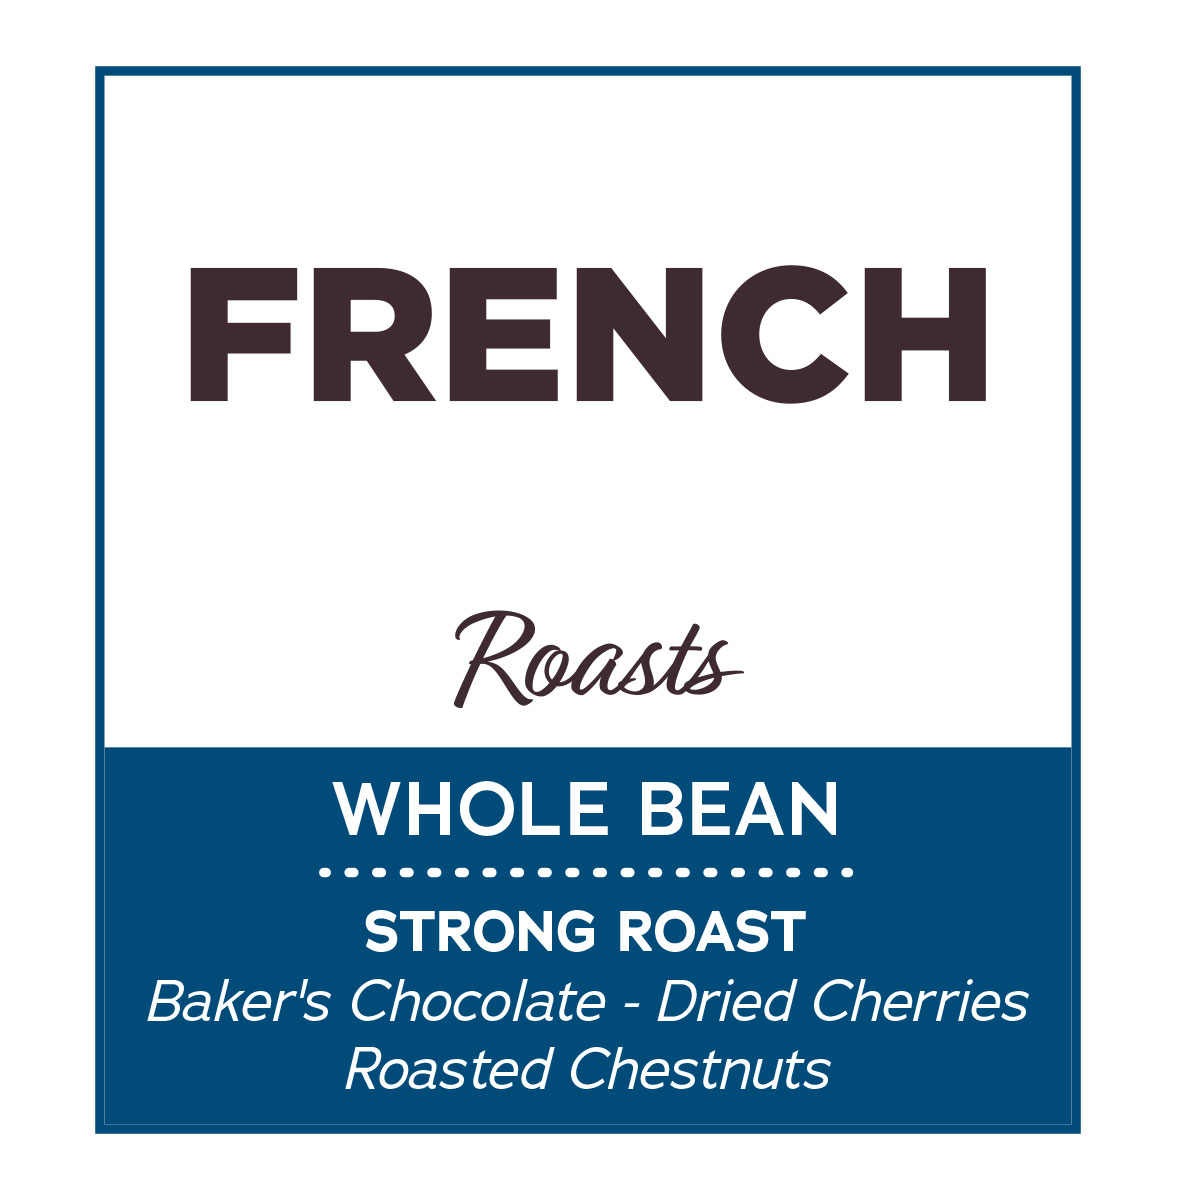 French Roast Organic